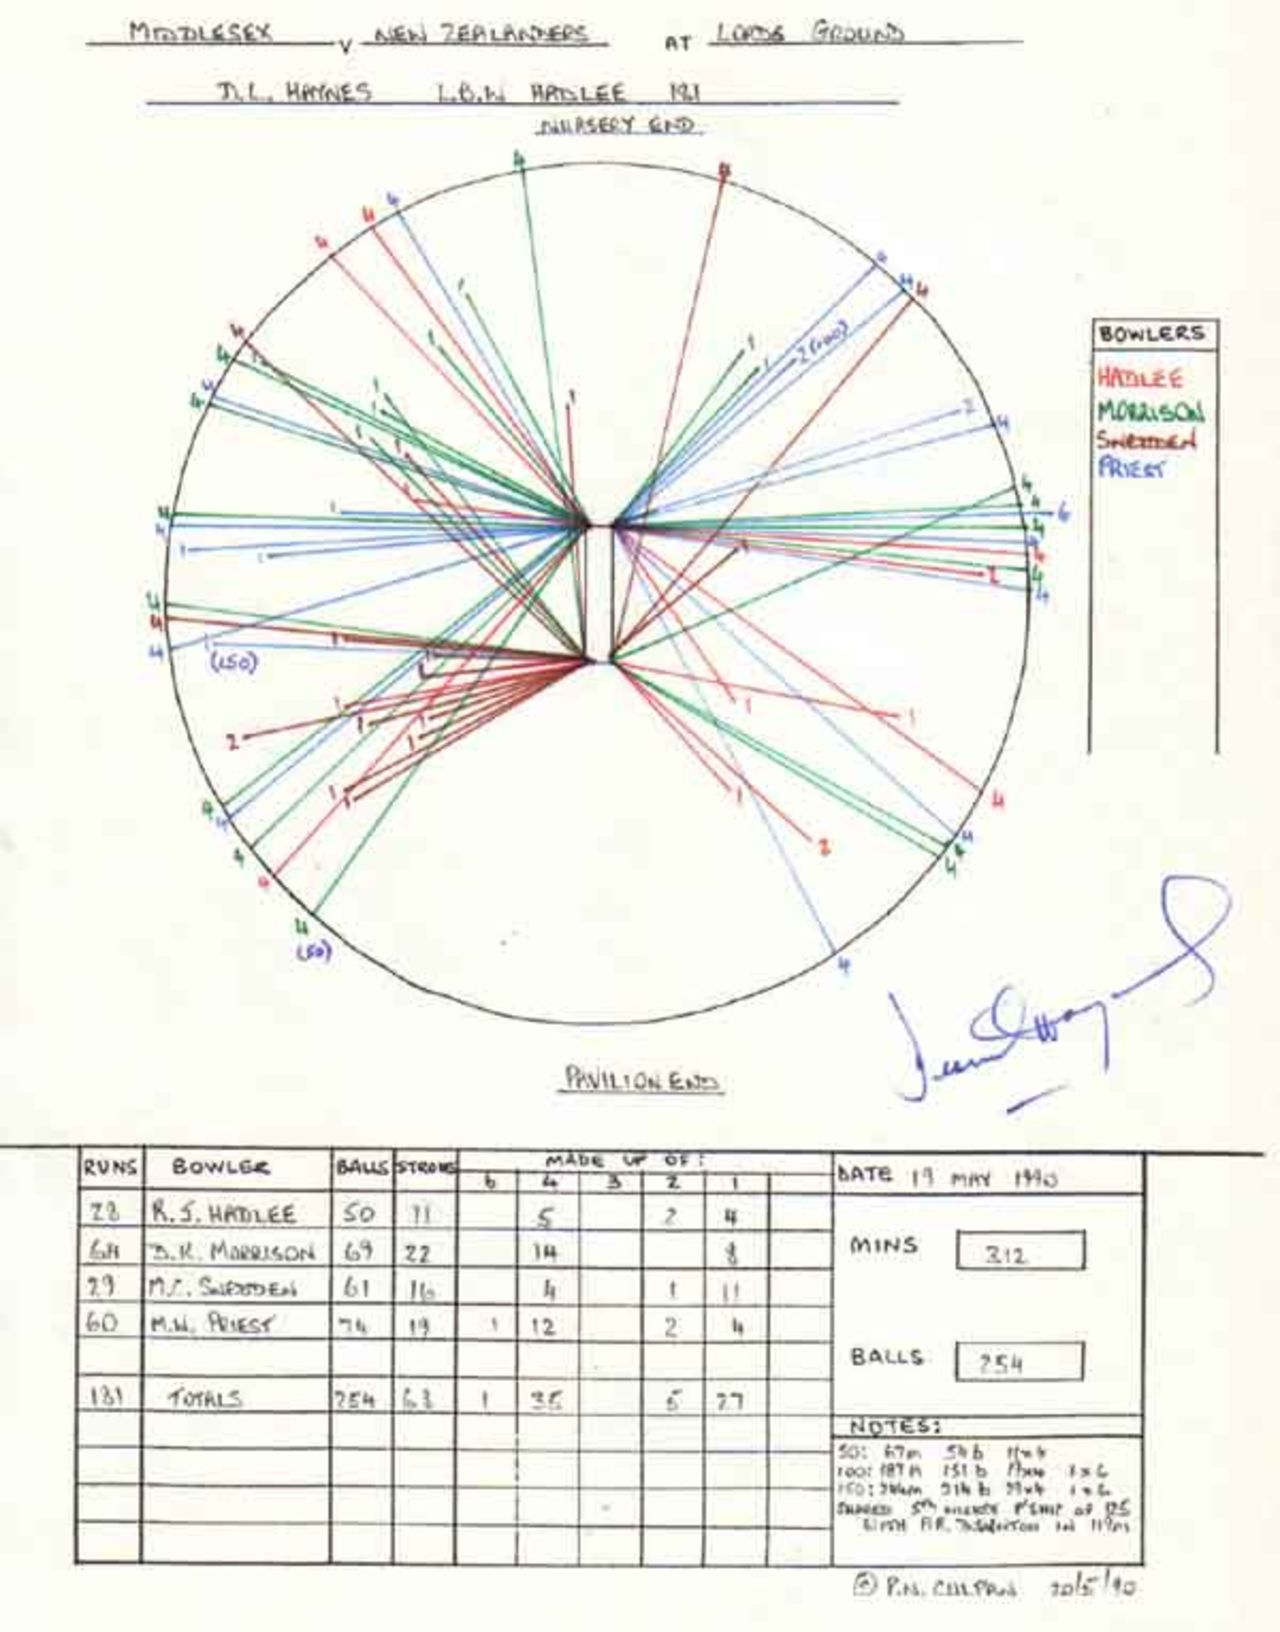 Wagon Wheel of Desmond Haynes 181 v New Zealanders, Lord's, May 19, 1990